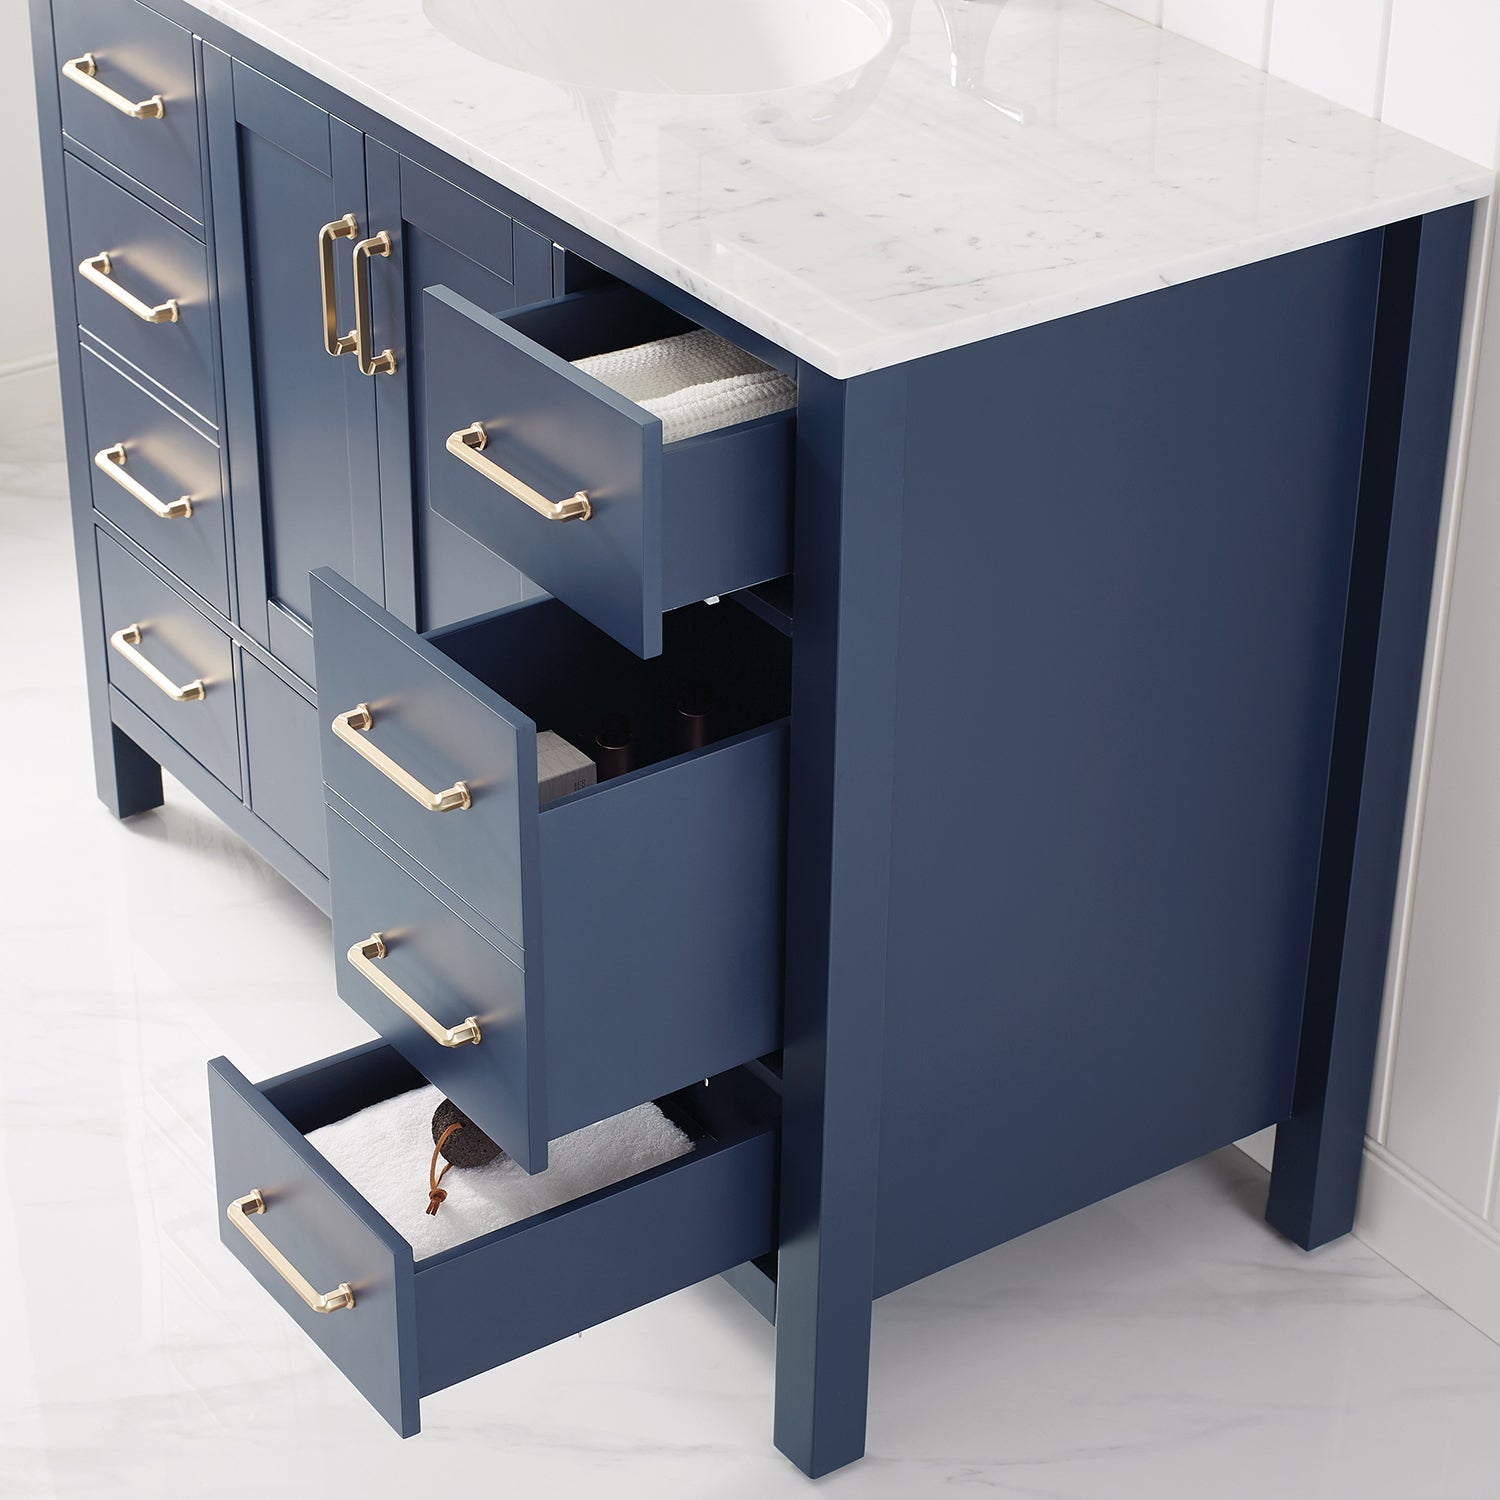 Vinnova Gela 48" Bathroom Vanity Set in Royal Blue w/ Carrara White Marble Countertop | 723048-RB-CA